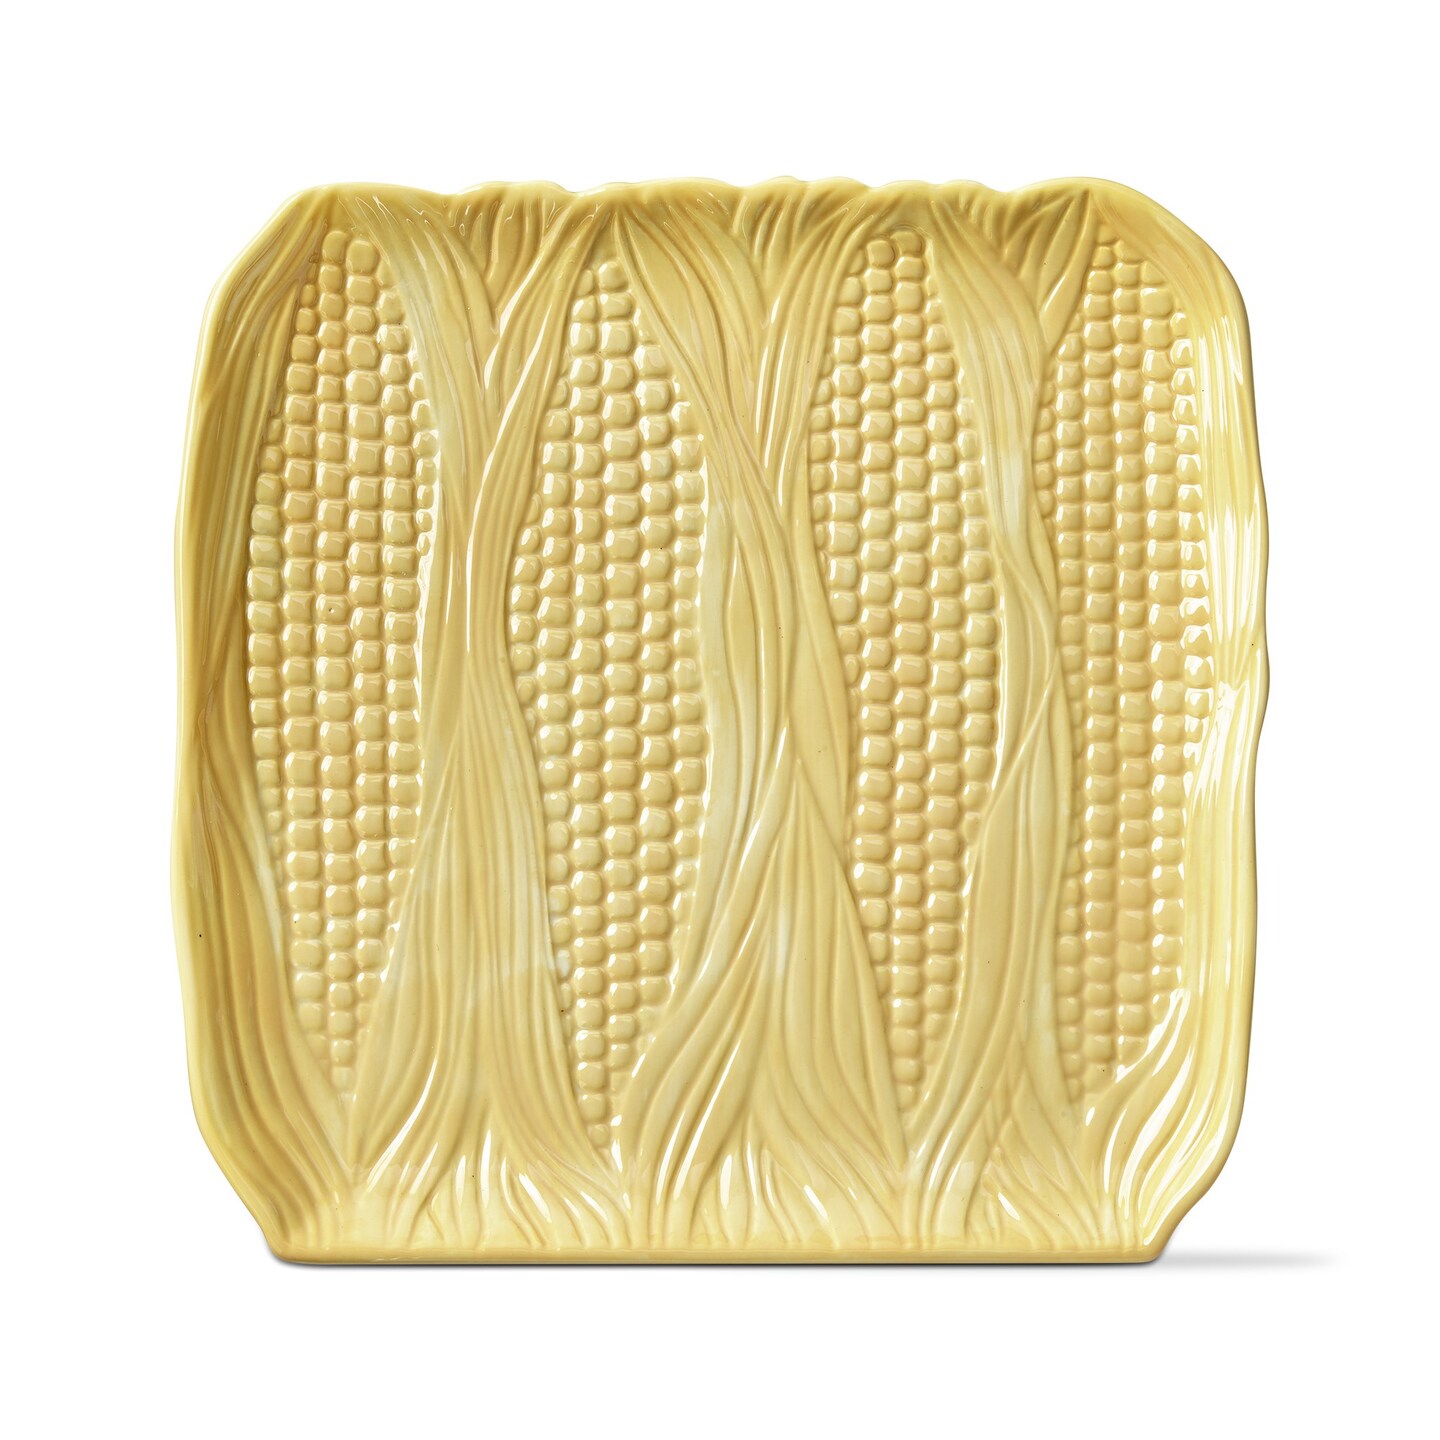 Corn on Cobb Textured Ceramic Yellow Platter Dishwasher Safe, 12.5L x12.5W x 1.1H